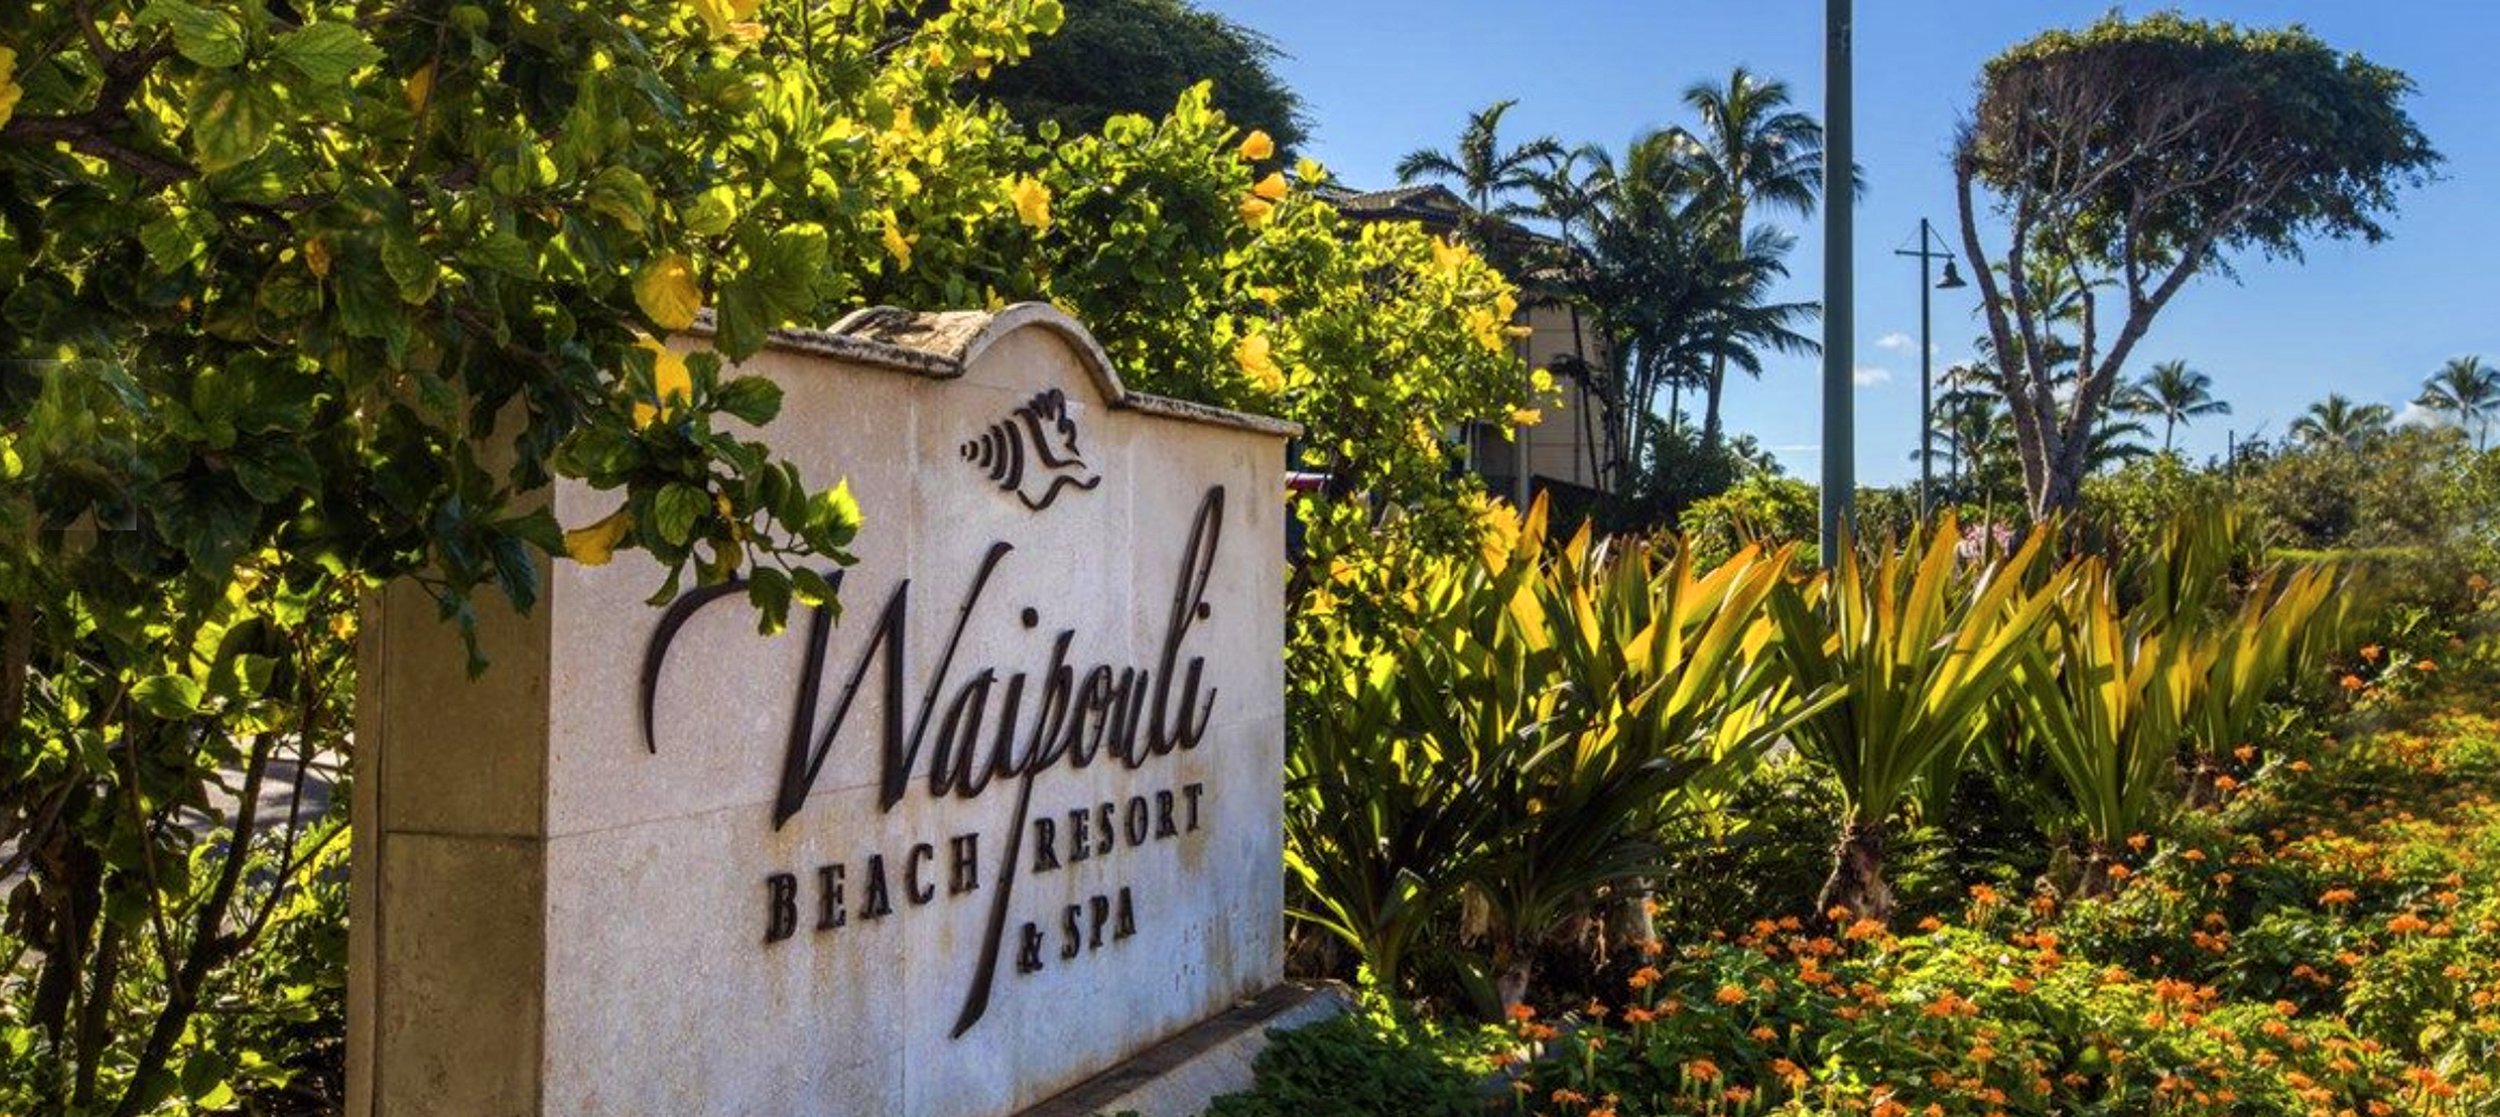 Waipouli resort signage.jpg